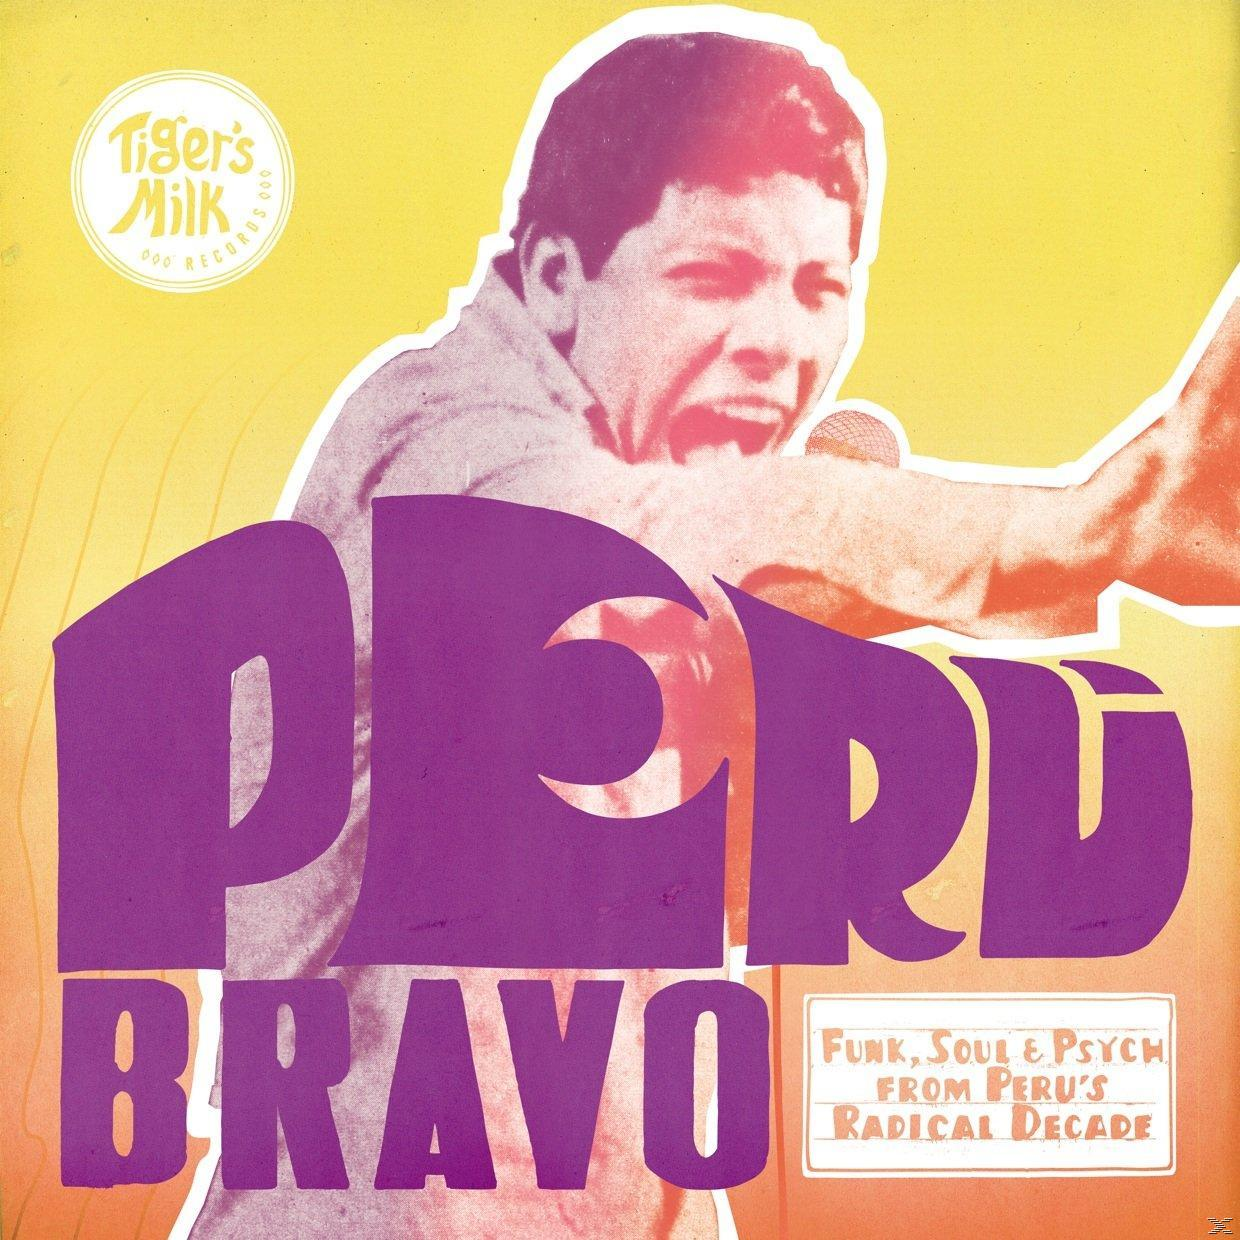 Soul (Vinyl) VARIOUS From Decade Psych Peru\'s - & Radical Funk, - Peru Bravo: